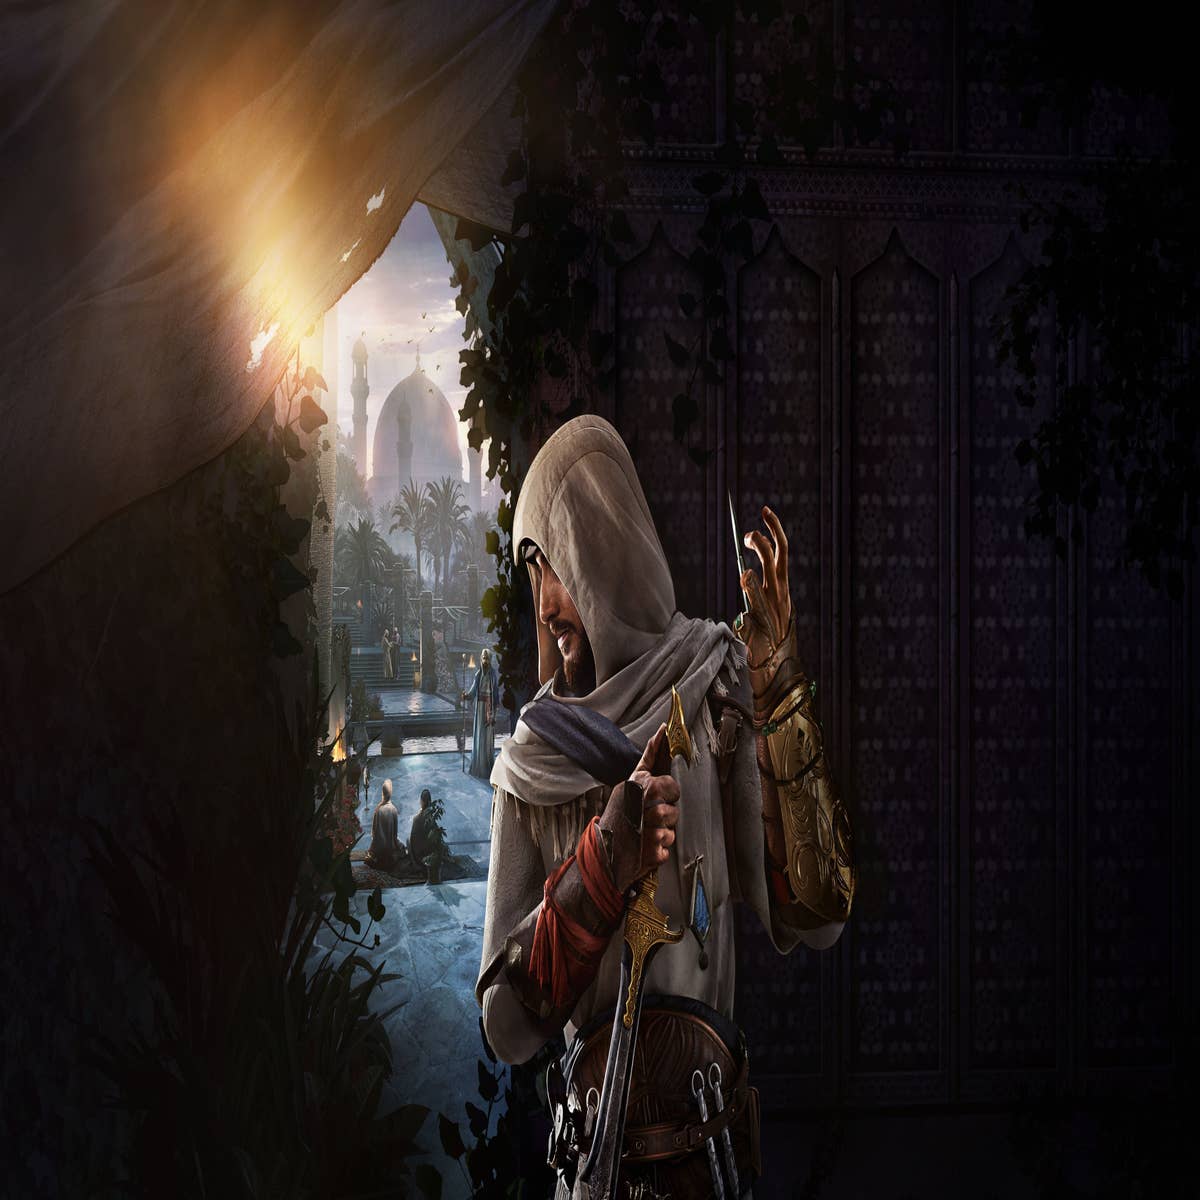 I finally got Assassin's Creed Mirage! : r/playstation